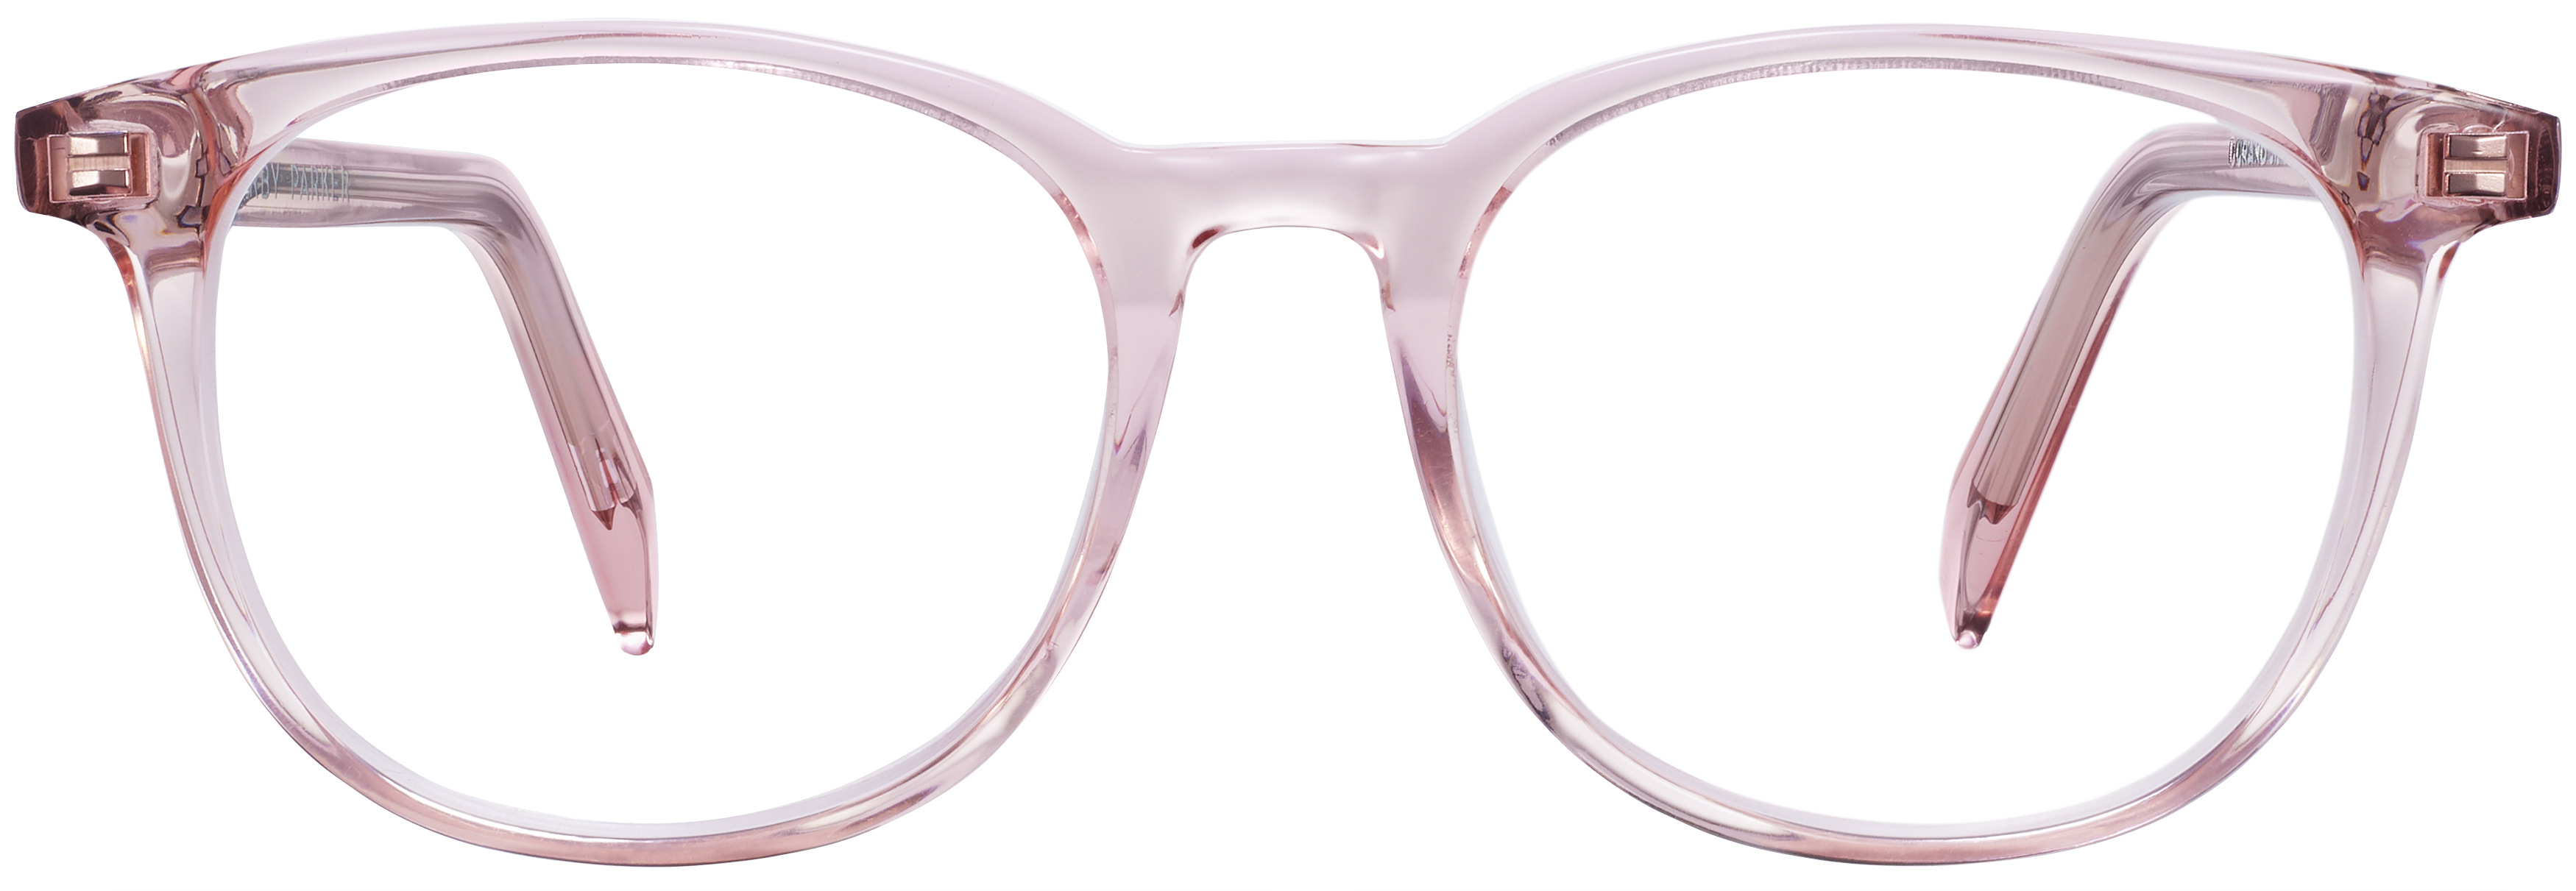 Durand Eyeglasses in Rose Crystal | Warby Parker